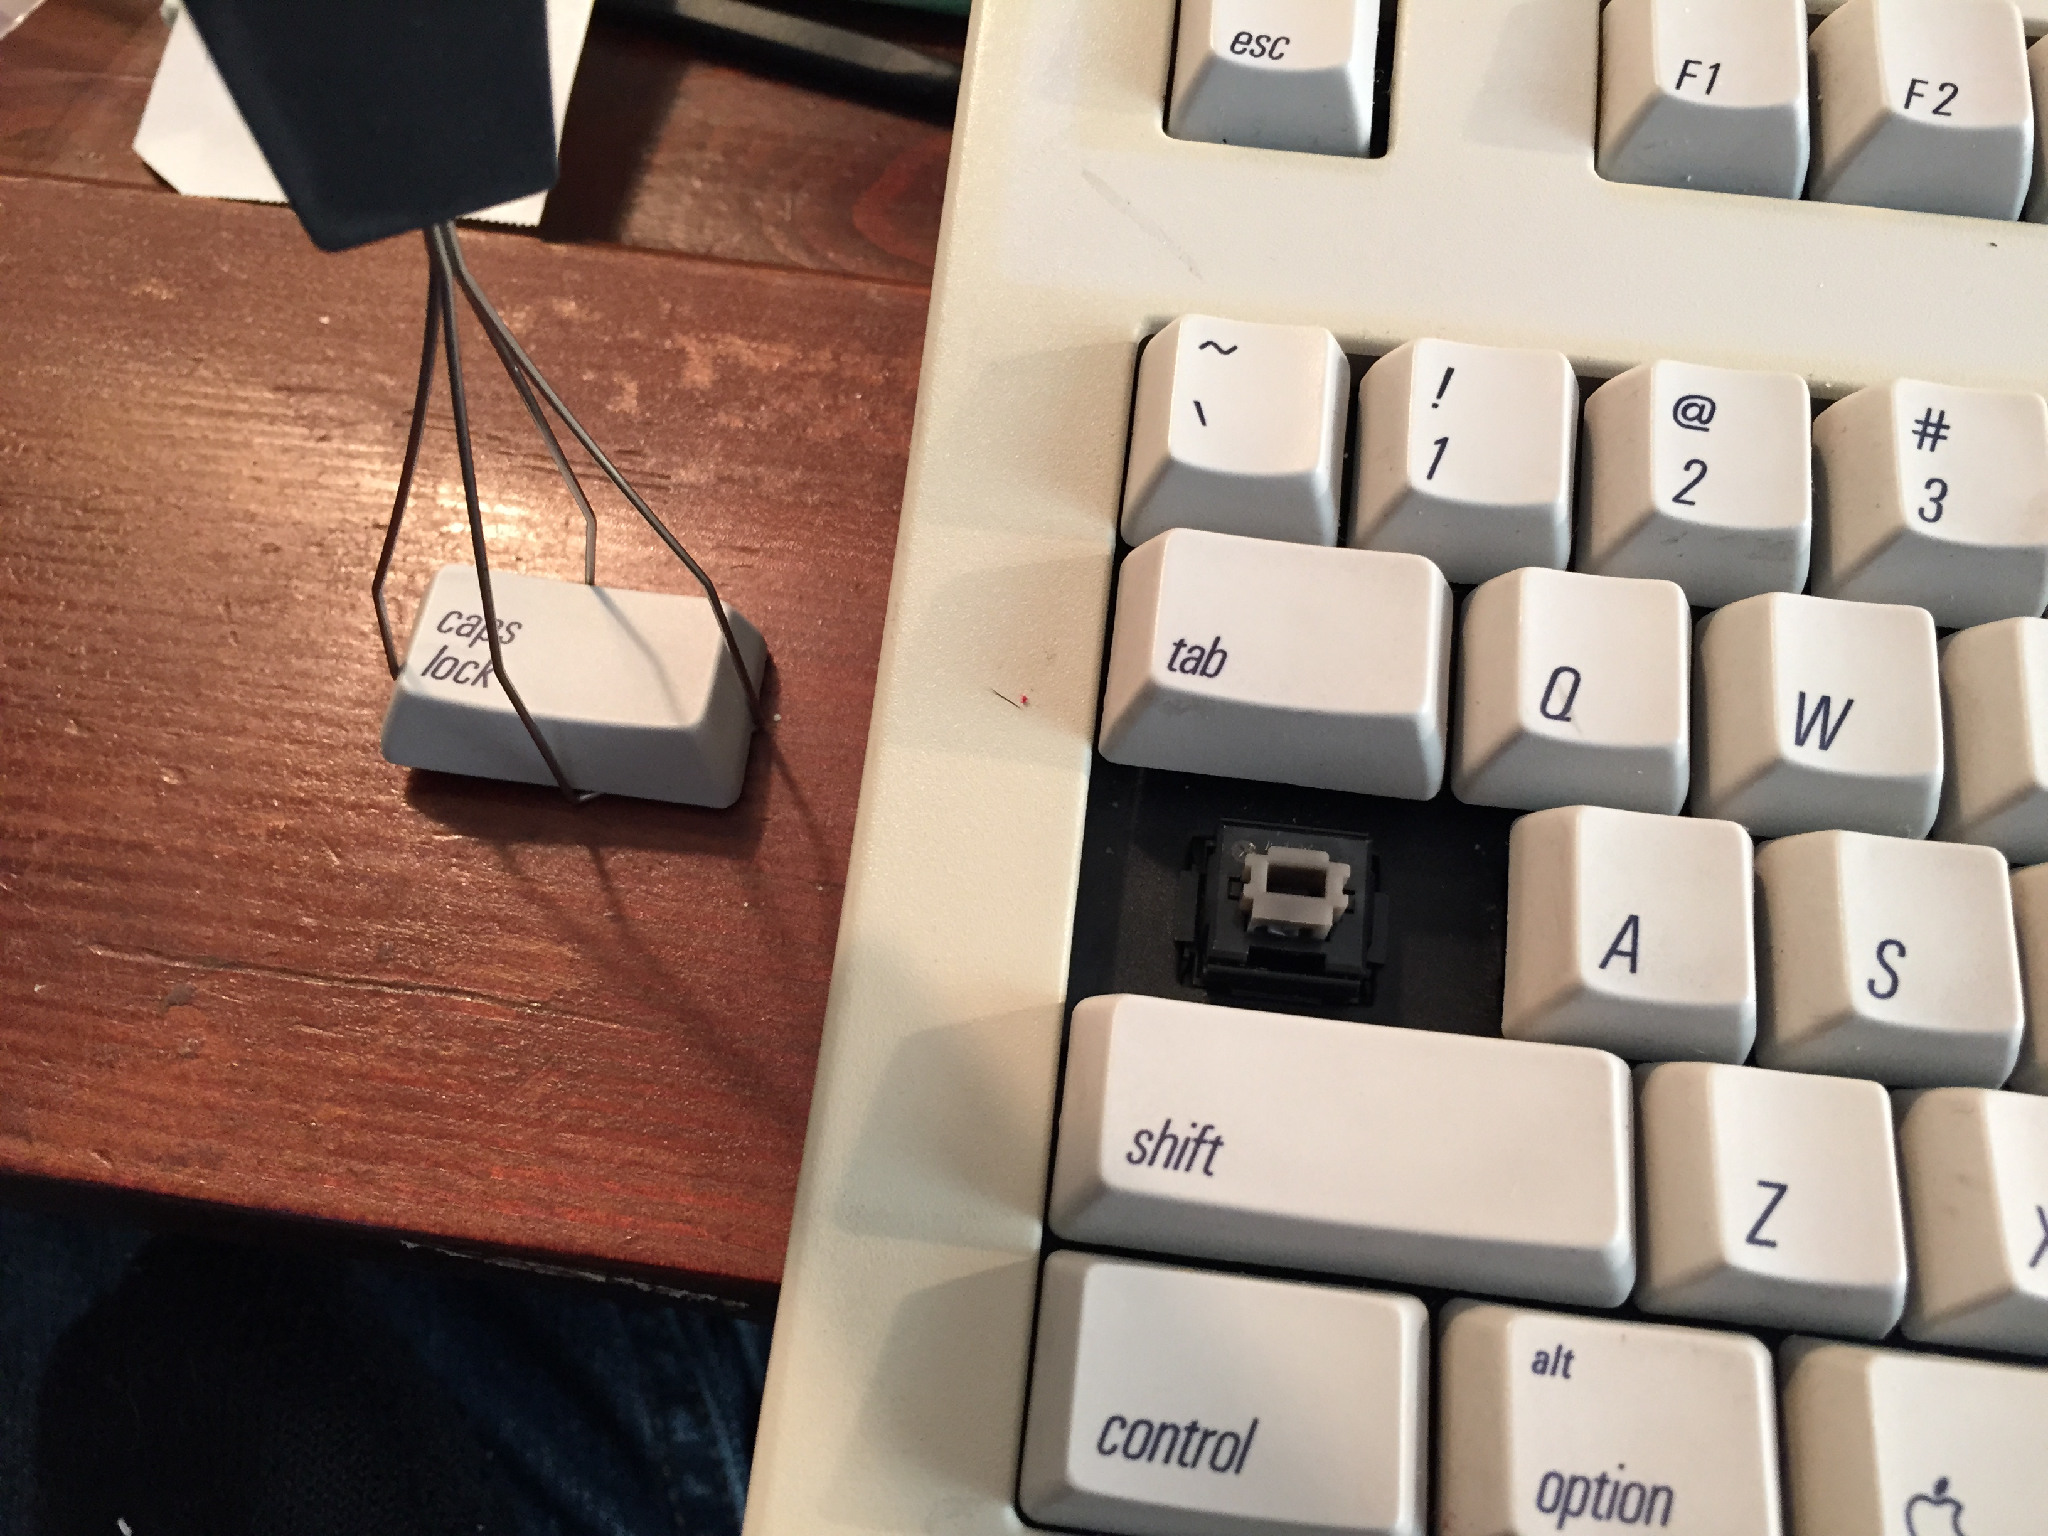 'Caps Lock keycap pulled'